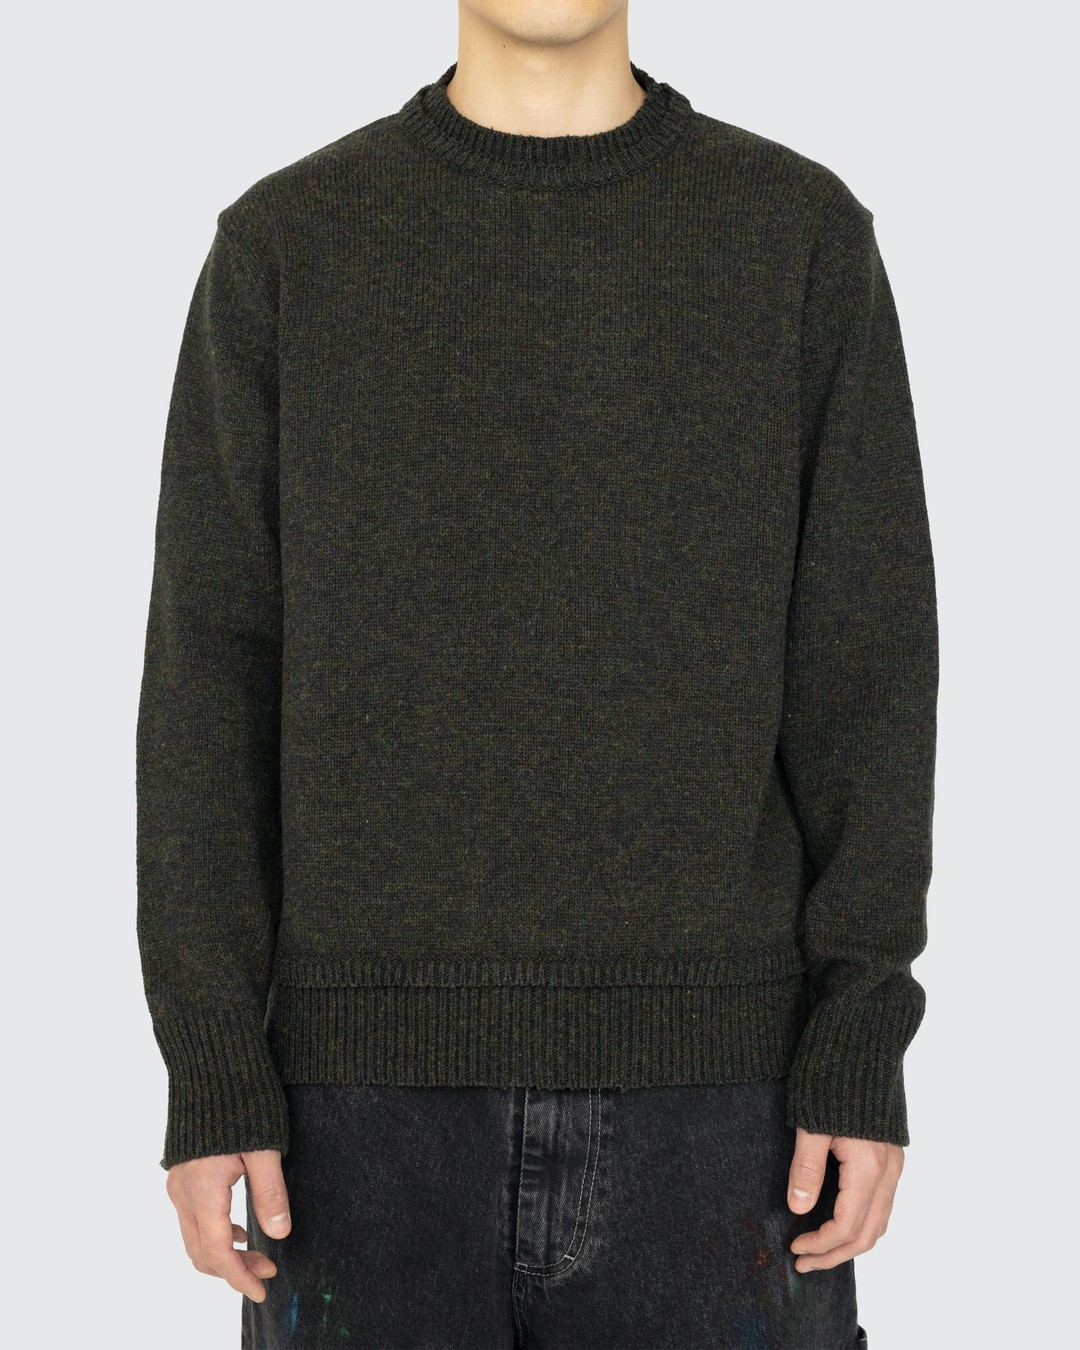 Maison Margiela – Elbow Patch Sweater Dark Green - Crewnecks - Green - Image 2